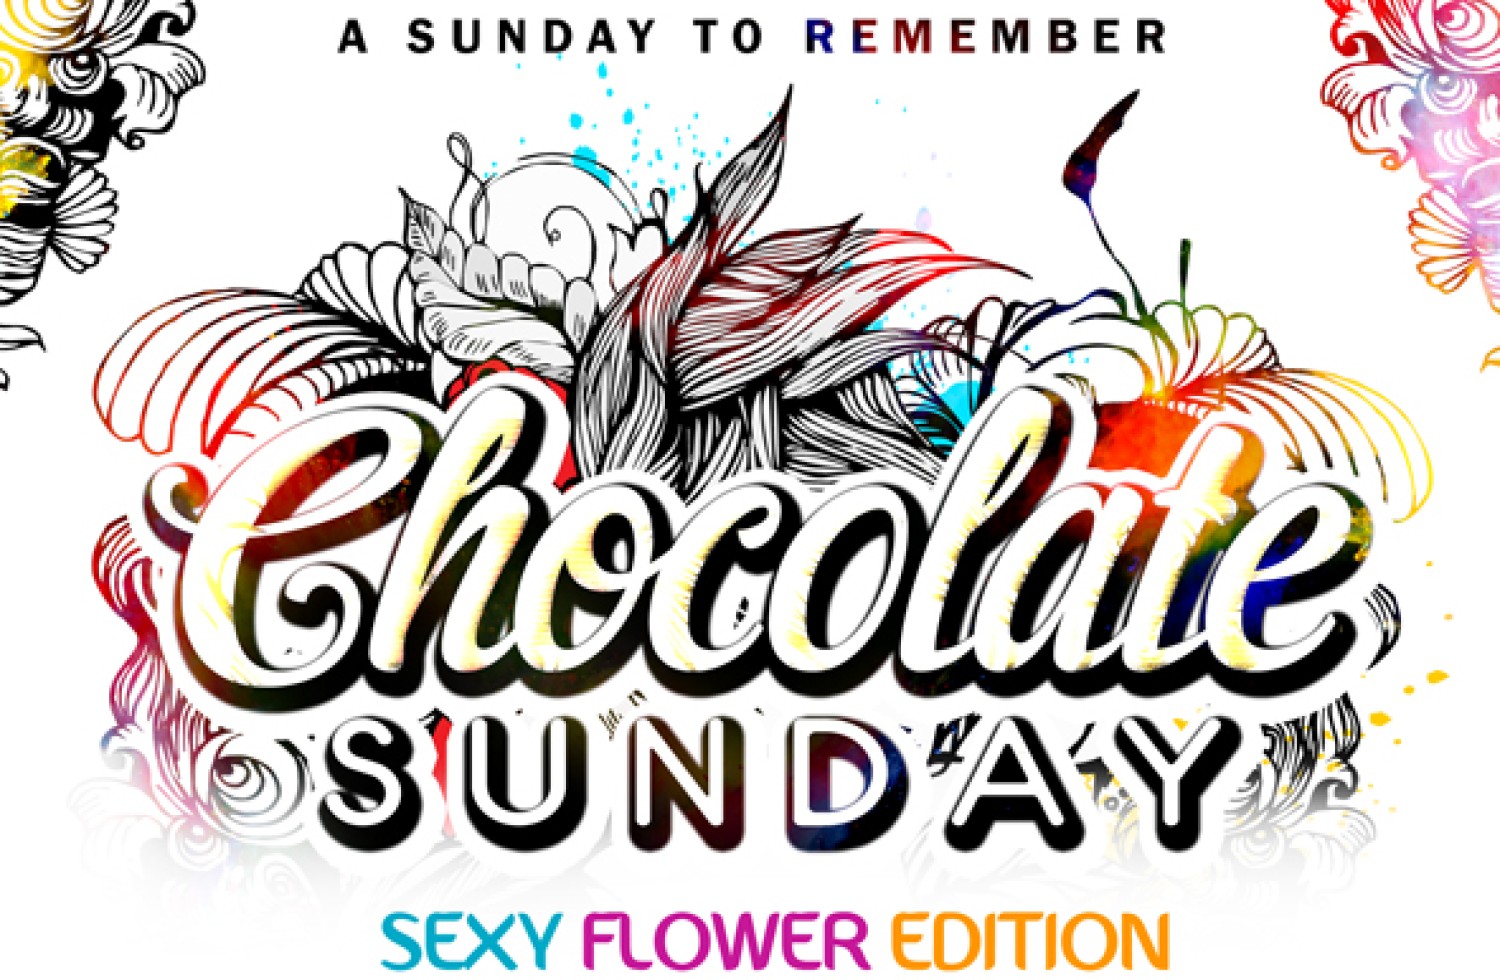 Party nieuws: Chocolate Sunday: Sexy Flower